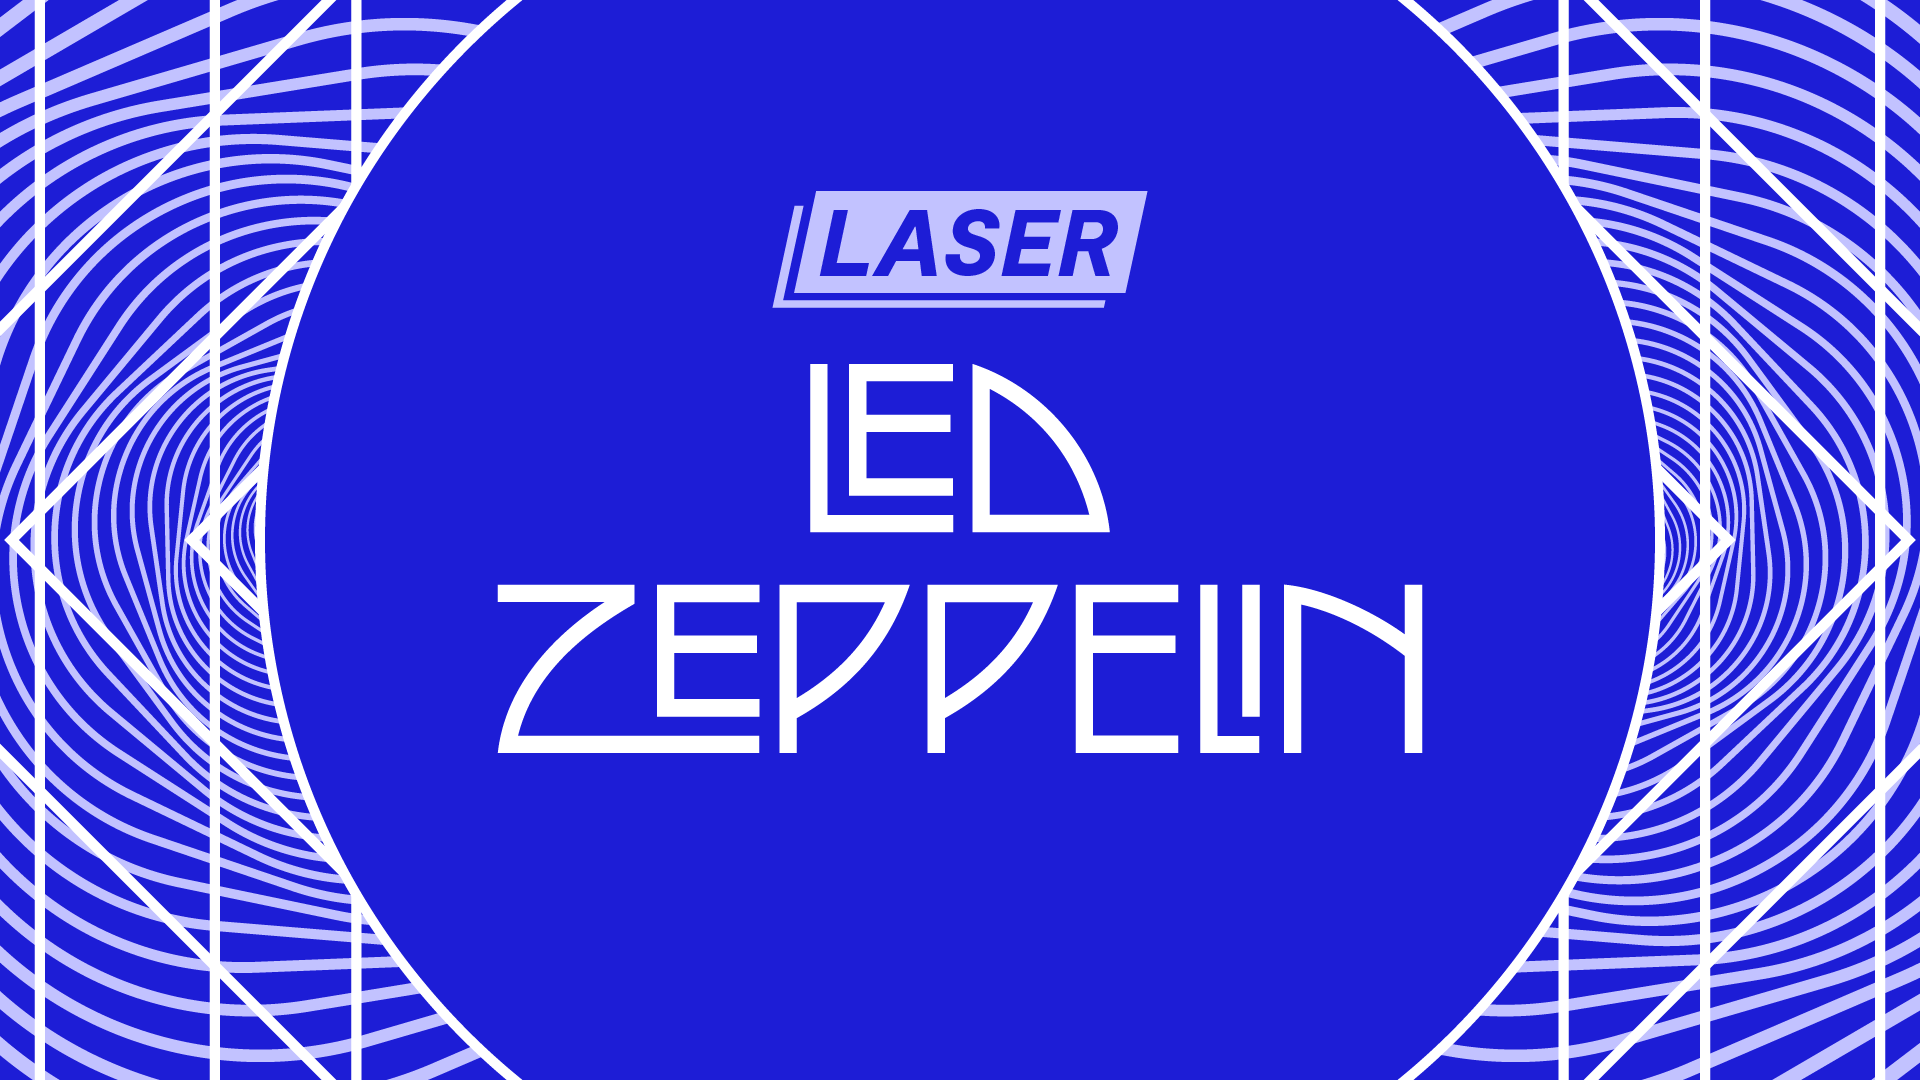 Laser Zeppelin - Pacific Science Center